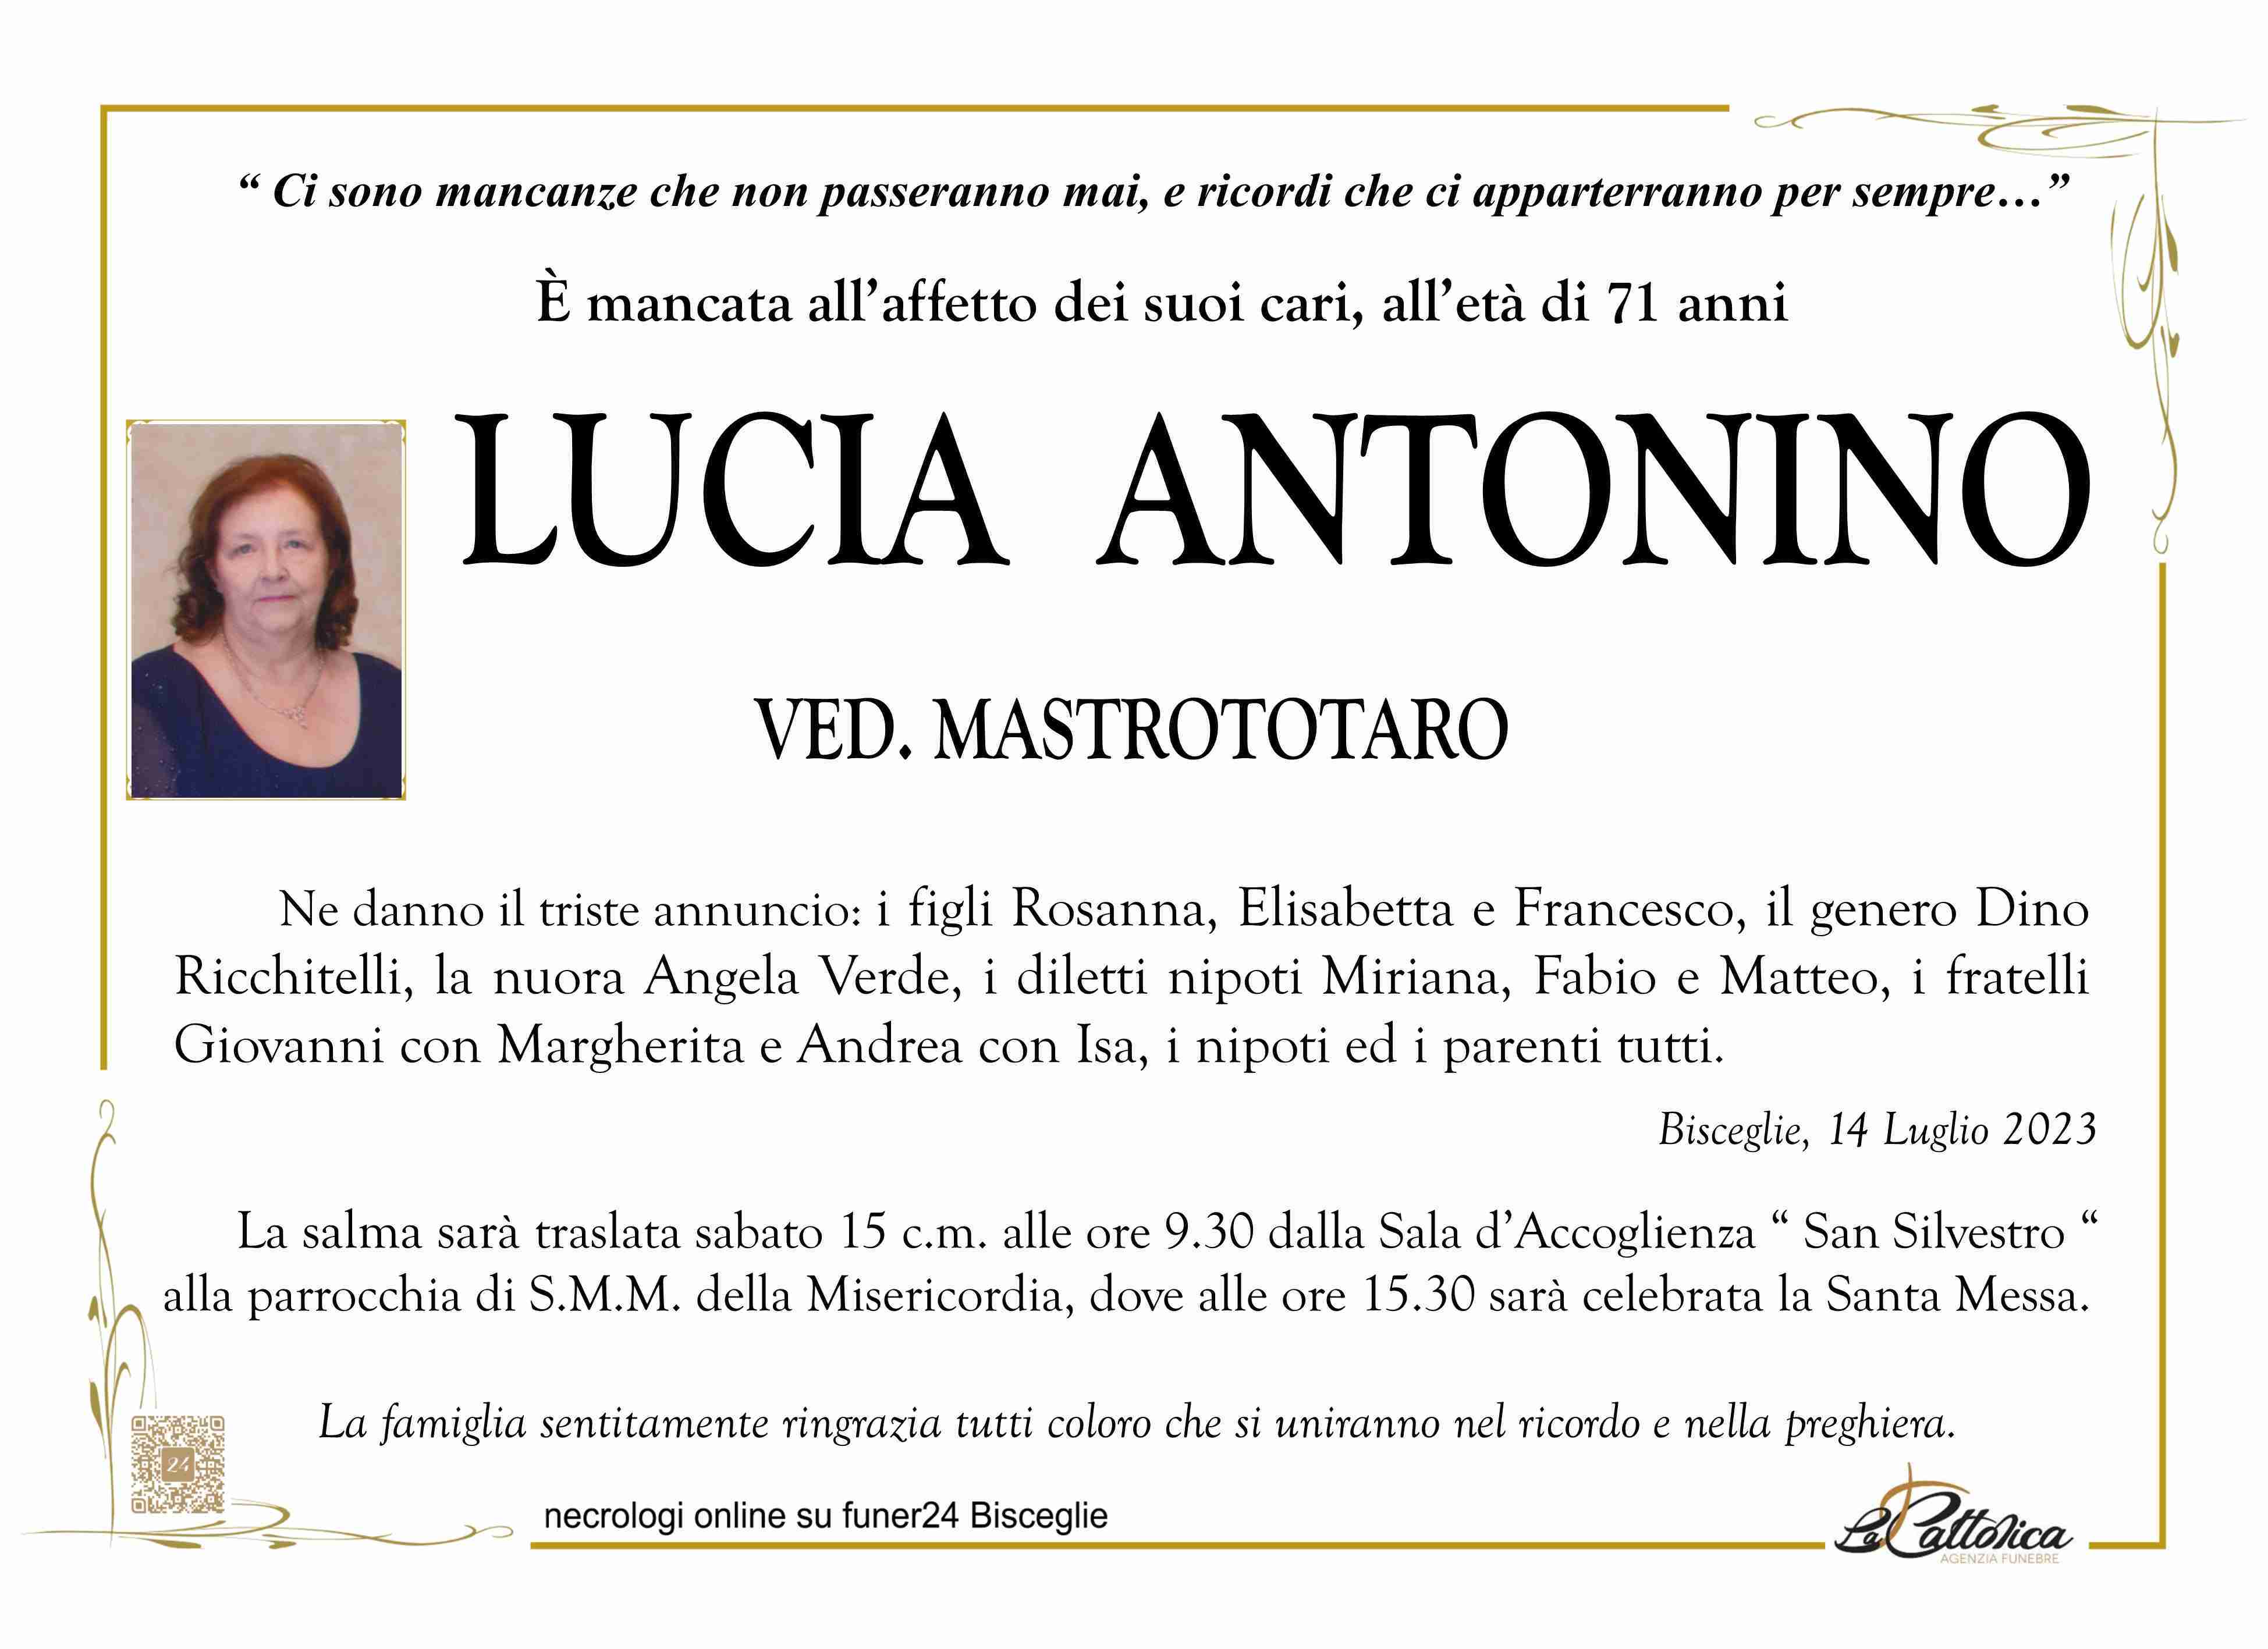 Lucia Antonino